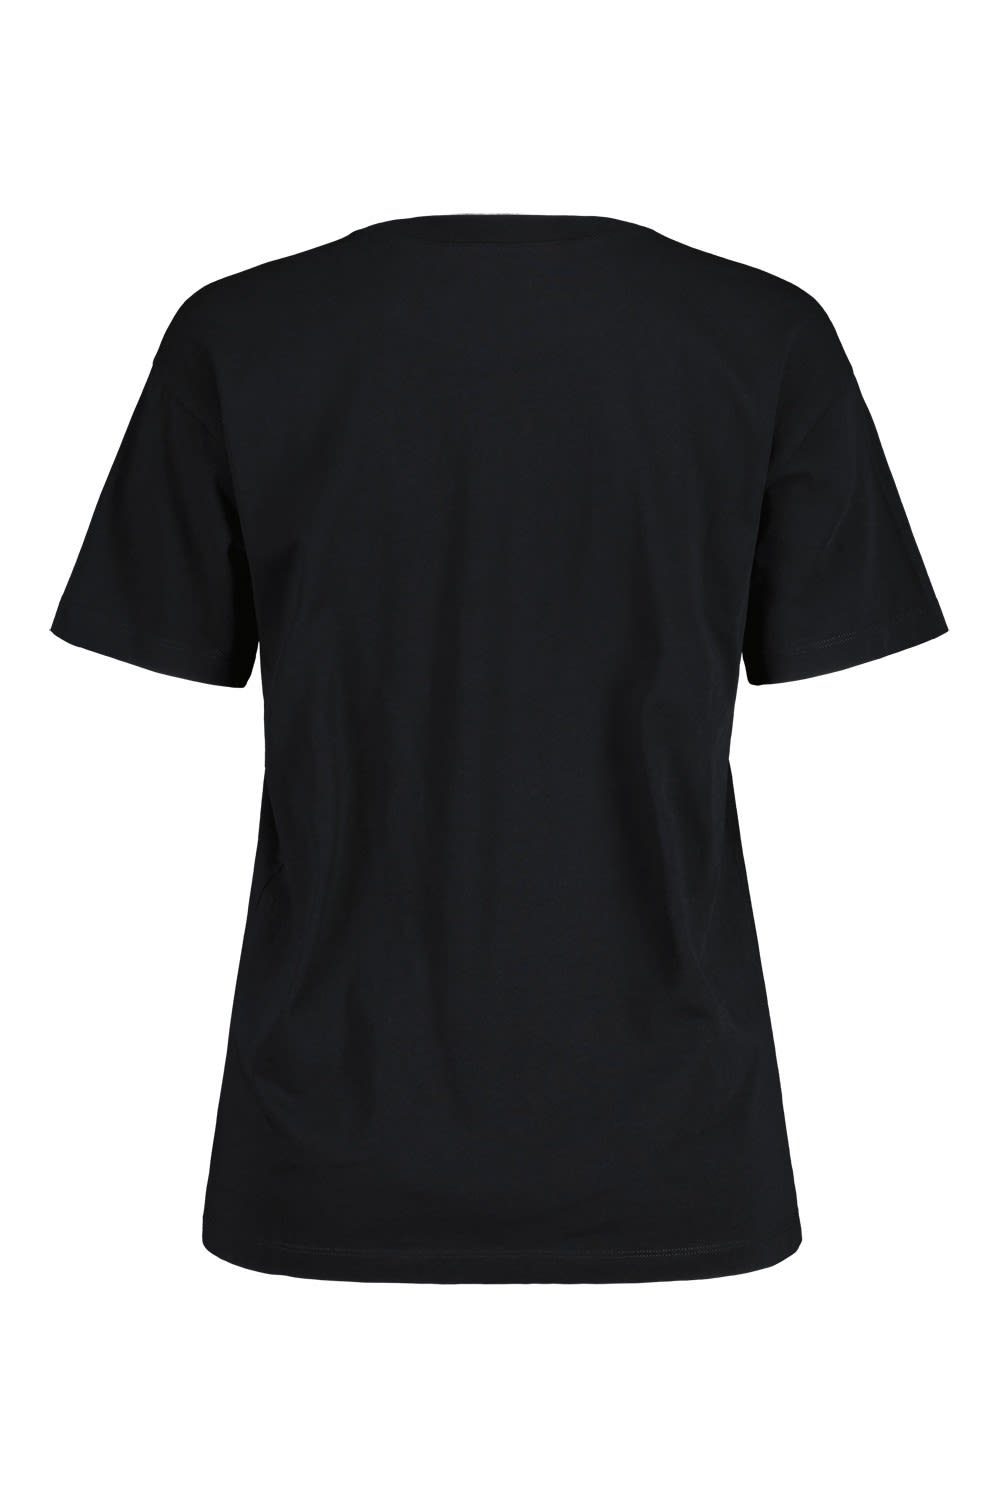 Maloja T-Shirt Maloja W Argualam. Moonless Damen T-shirt Kurzarm-Shirt